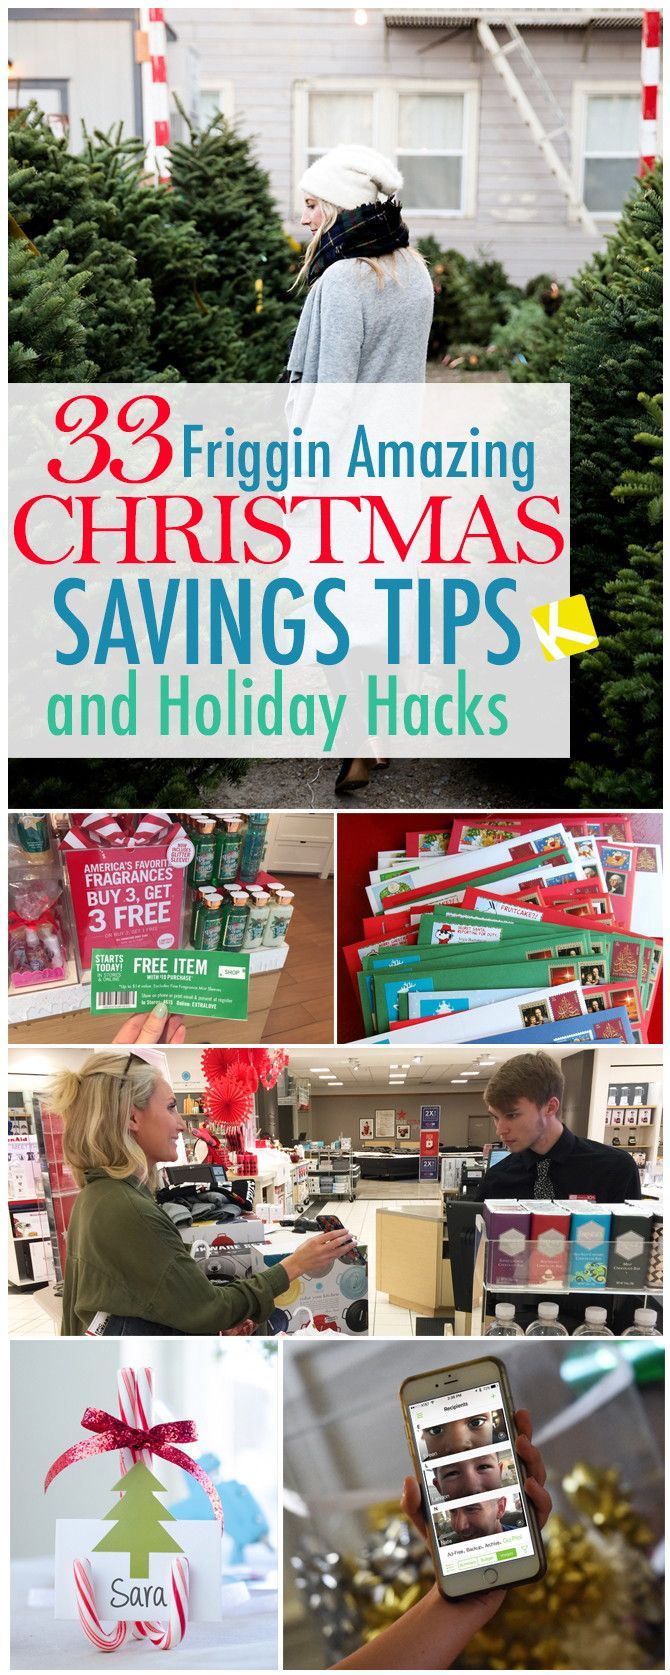 32 Amazing Christmas Savings Tips and Holiday Hacks -   15 holiday Hacks good ideas